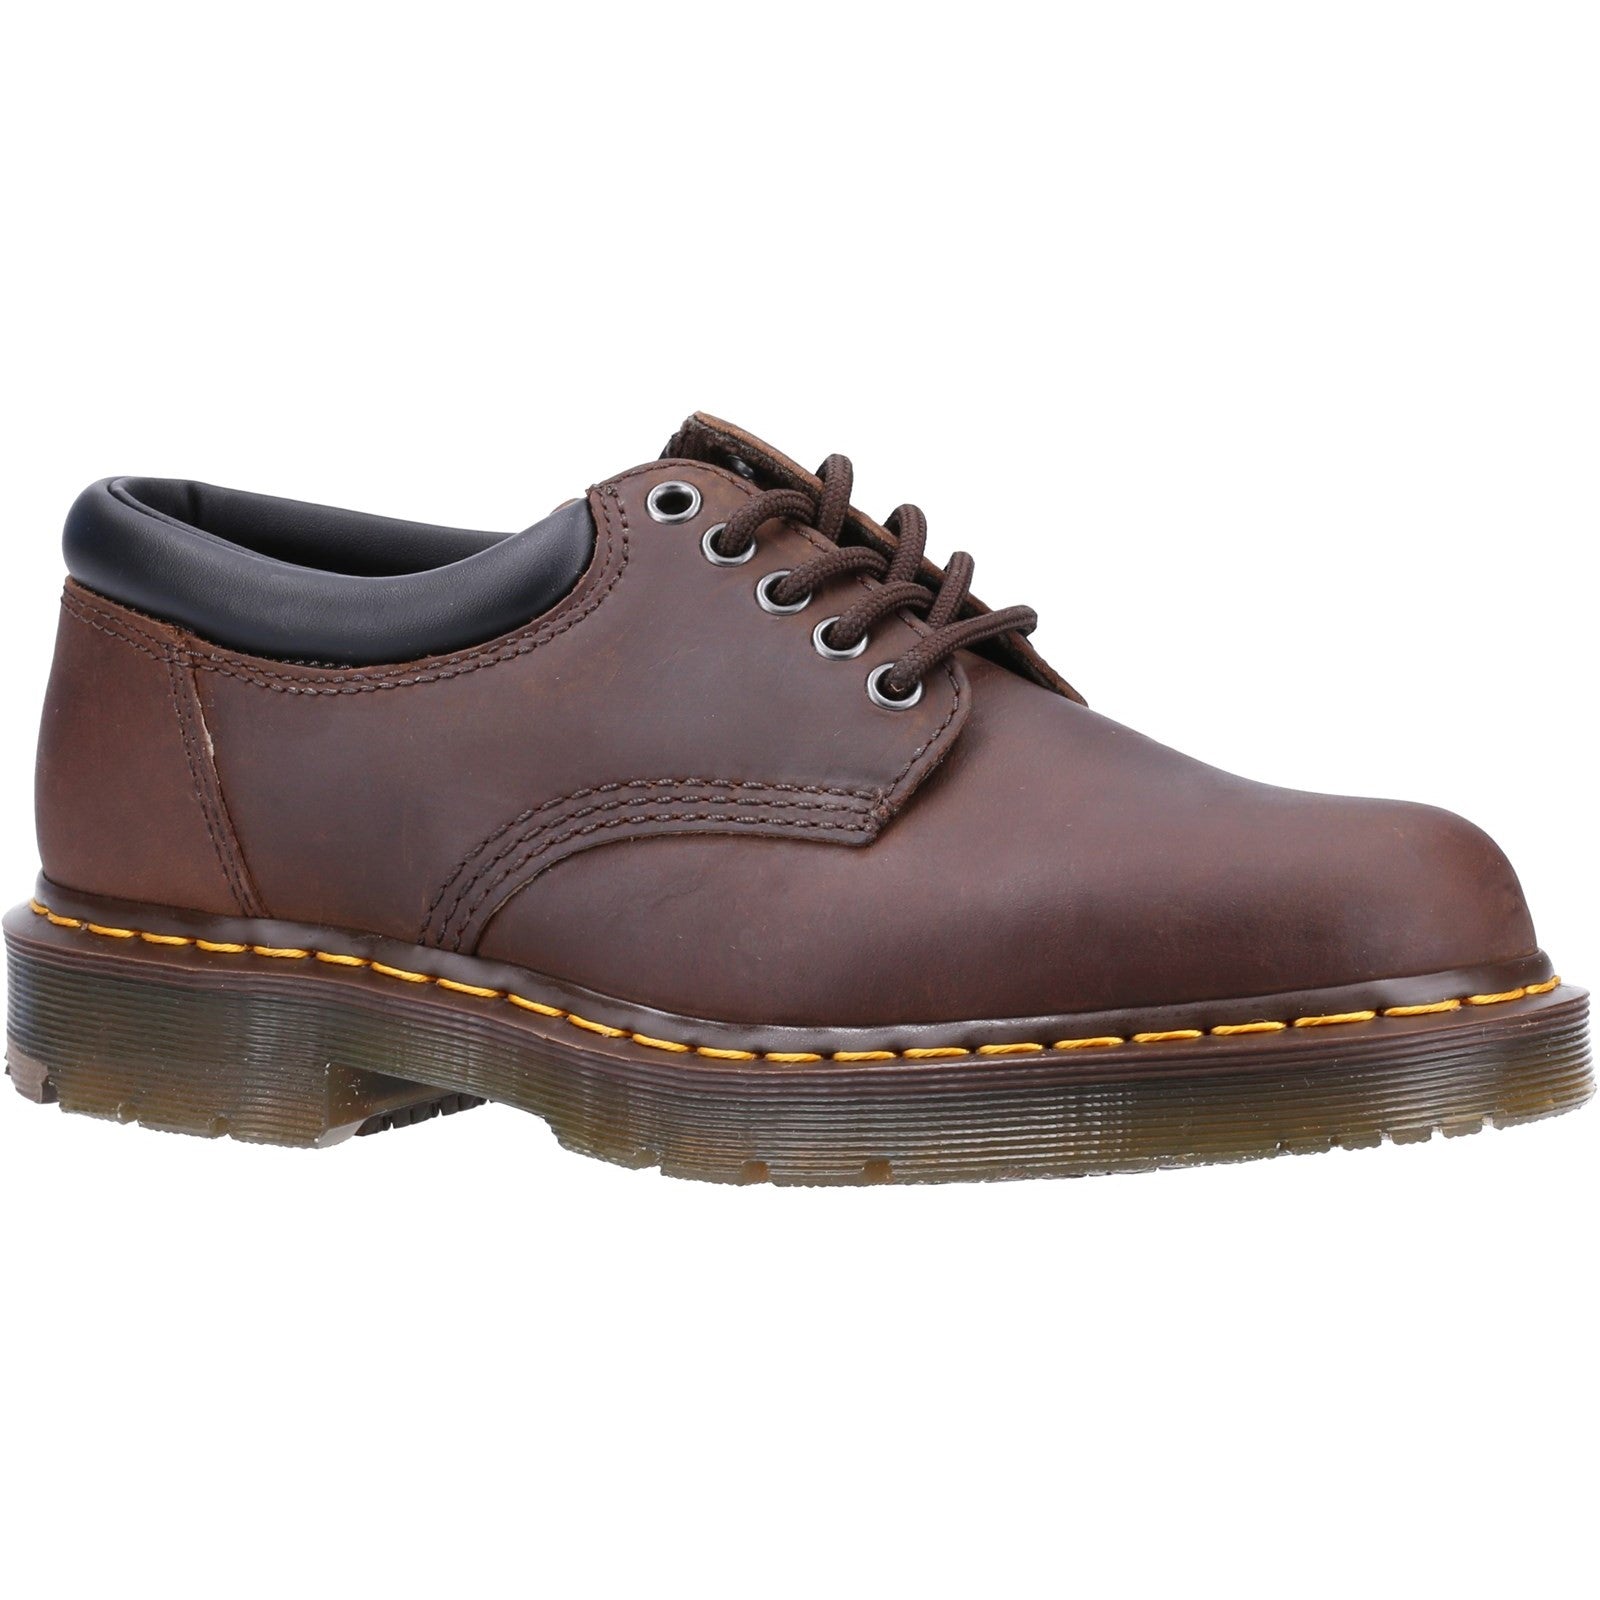 Dr Martens 8053 Slip Resistant Leather Shoes